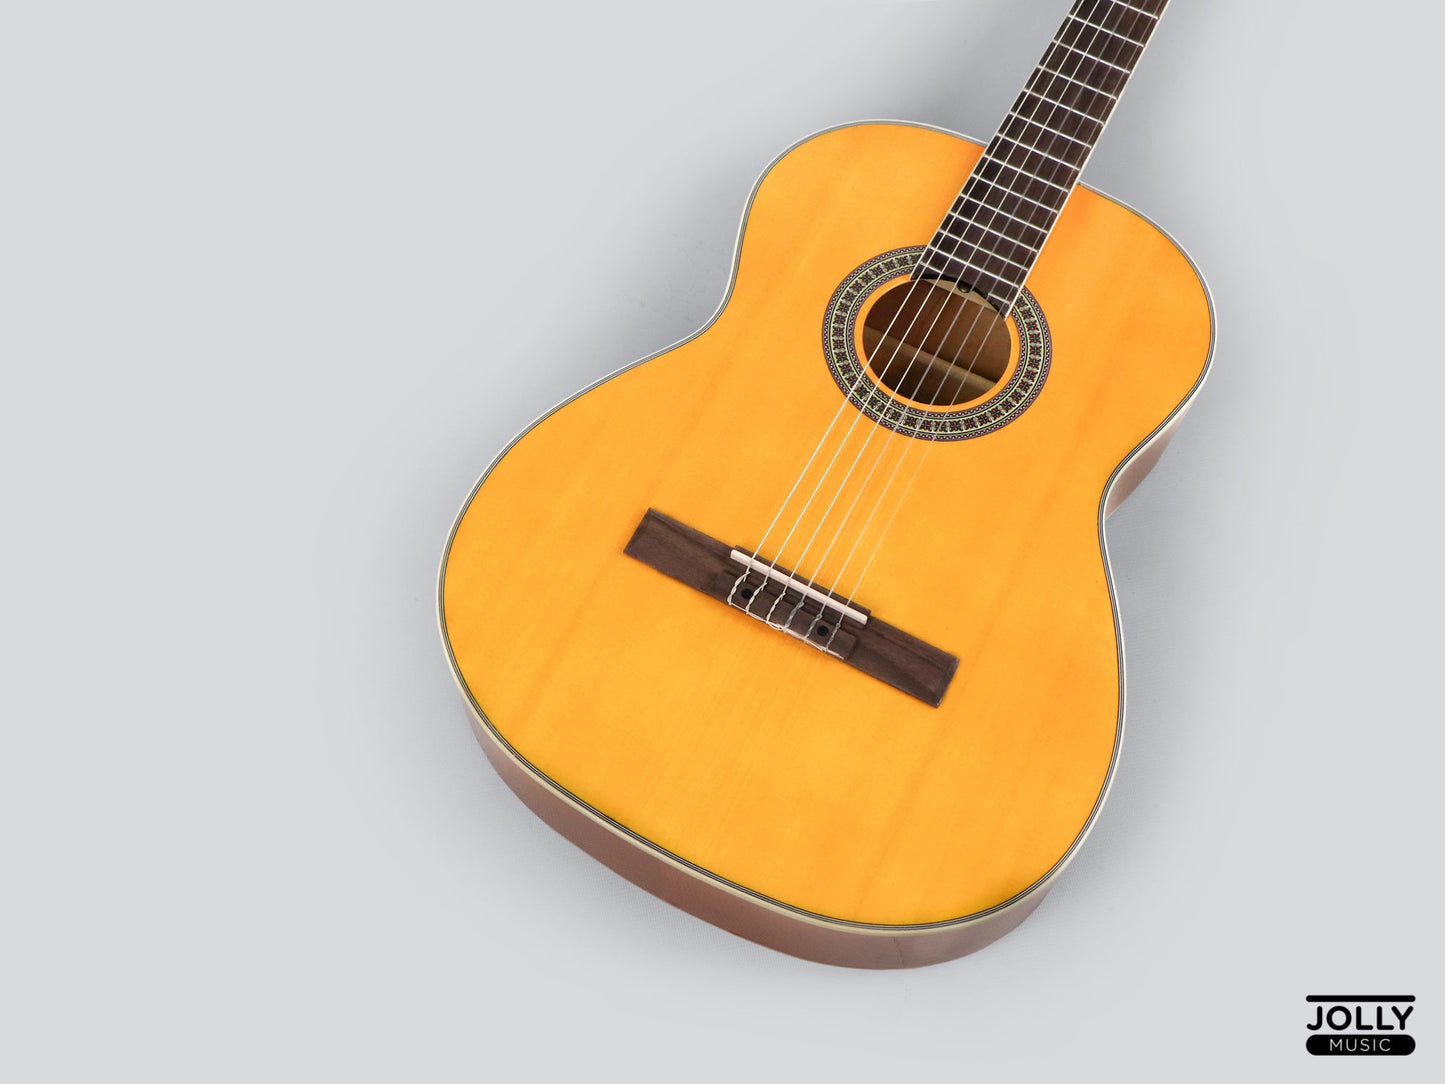 Deviser L-310-39-YN EQ Spruce Top Classical Guitar (Natural) with Devsier KLT-17A Pickup